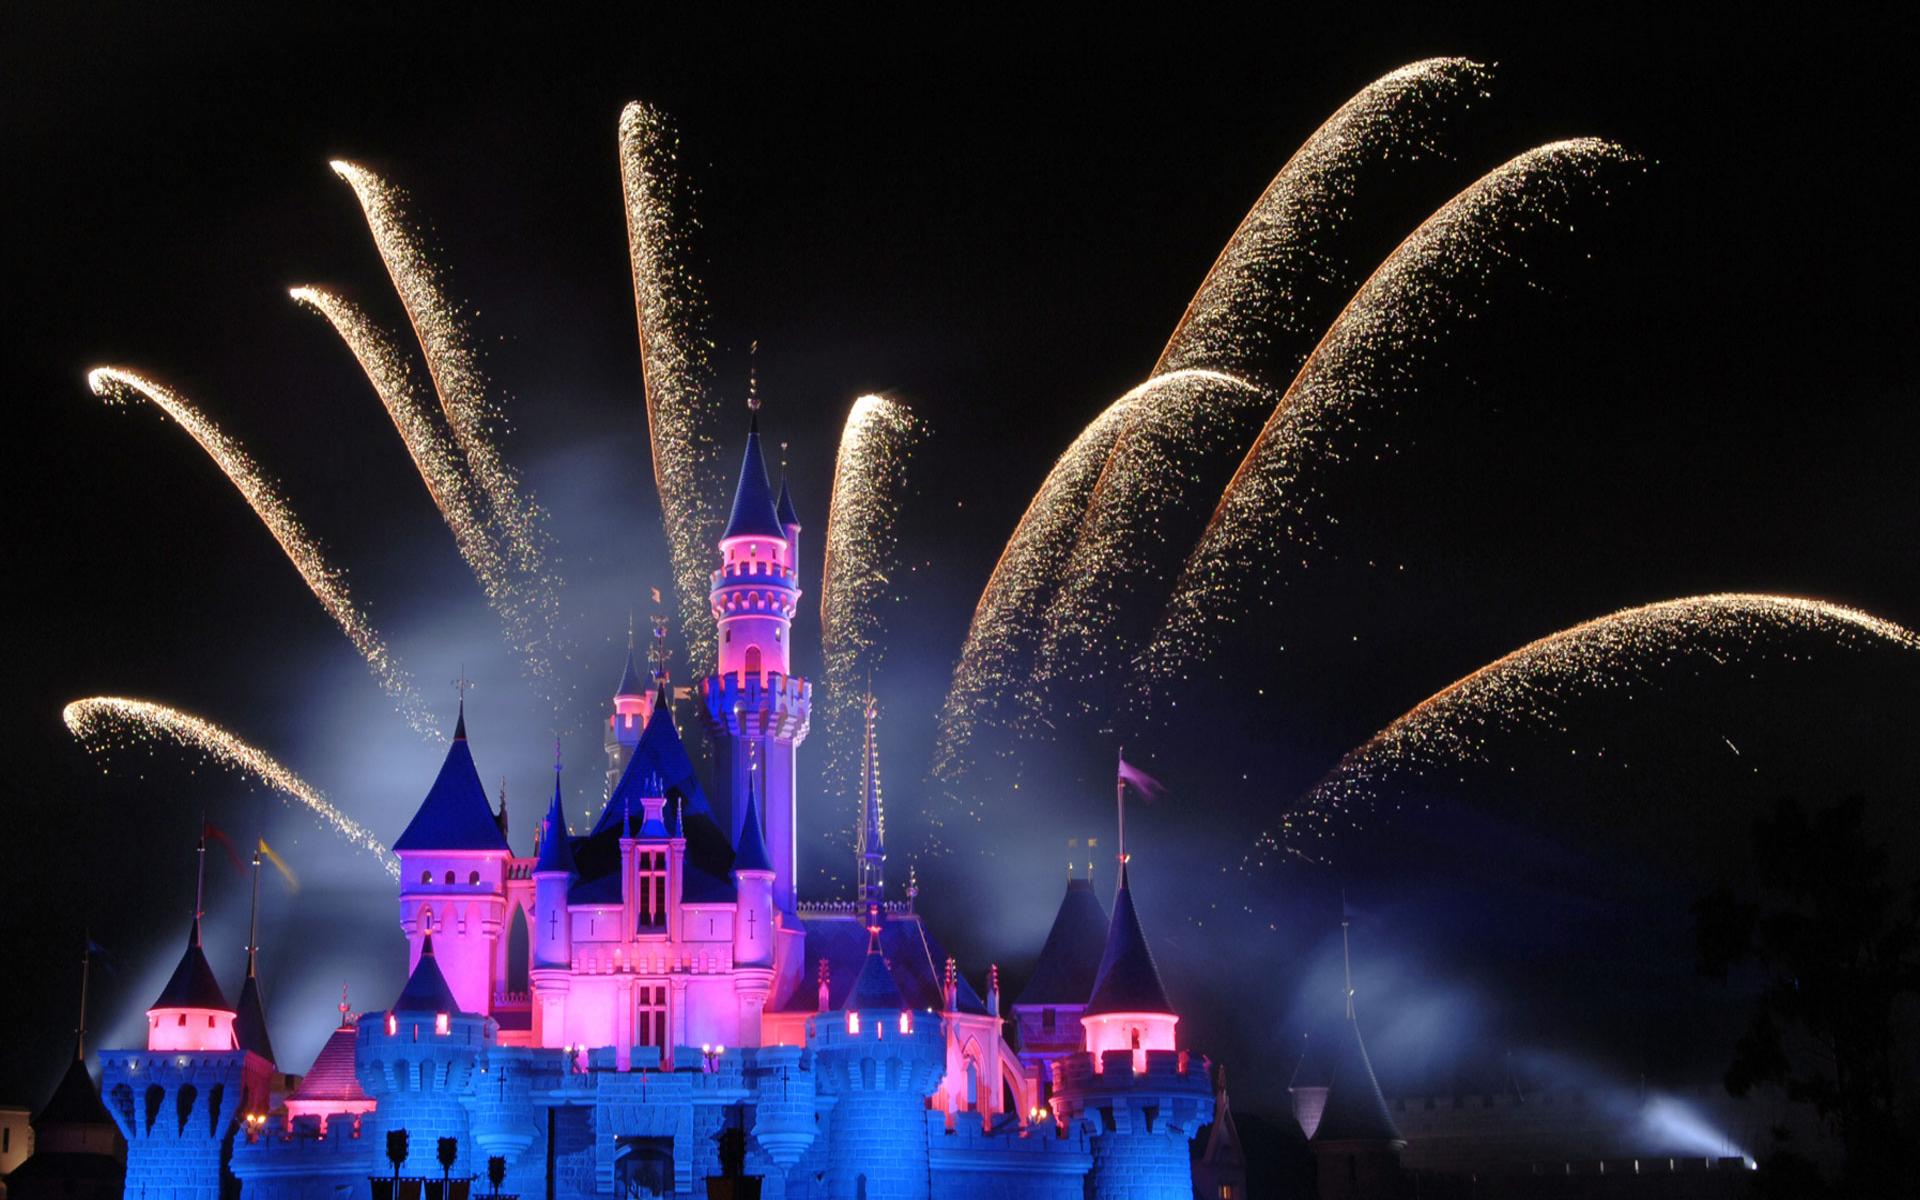 Fireworks light up the sky over Sleeping Beauty's castle at Disneyland in Hong Kong. - Disneyland